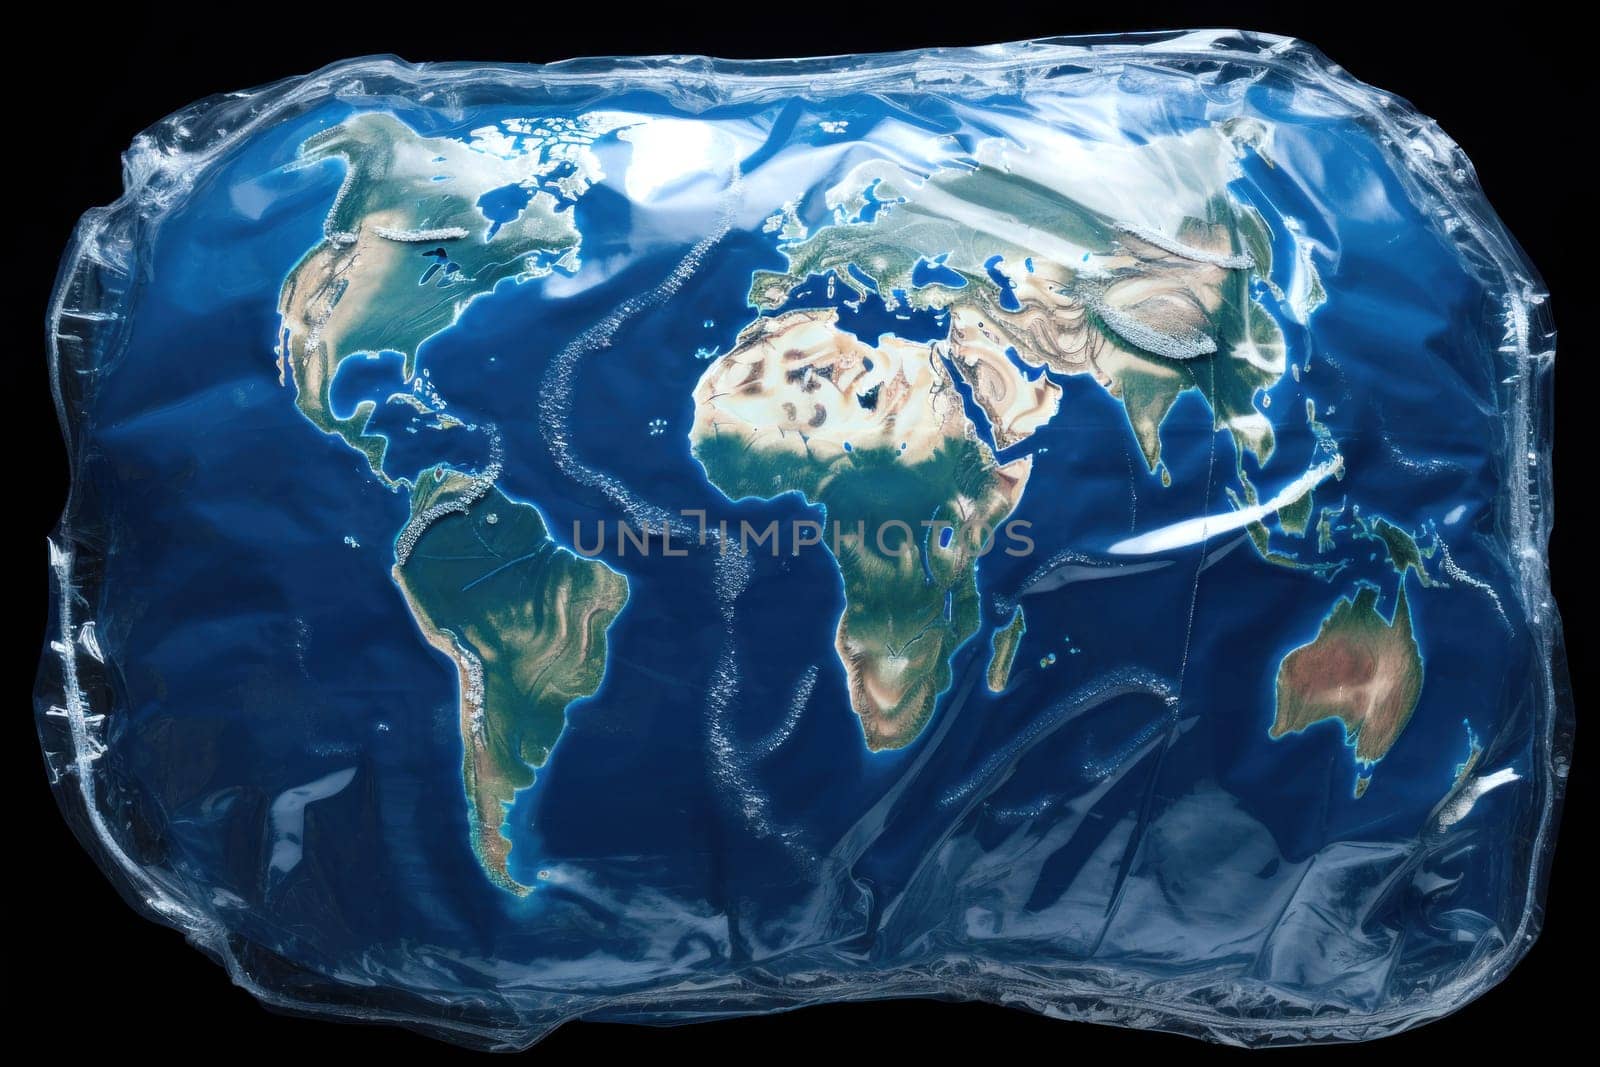 World Map under Crumpled Plastic Film by ugguggu